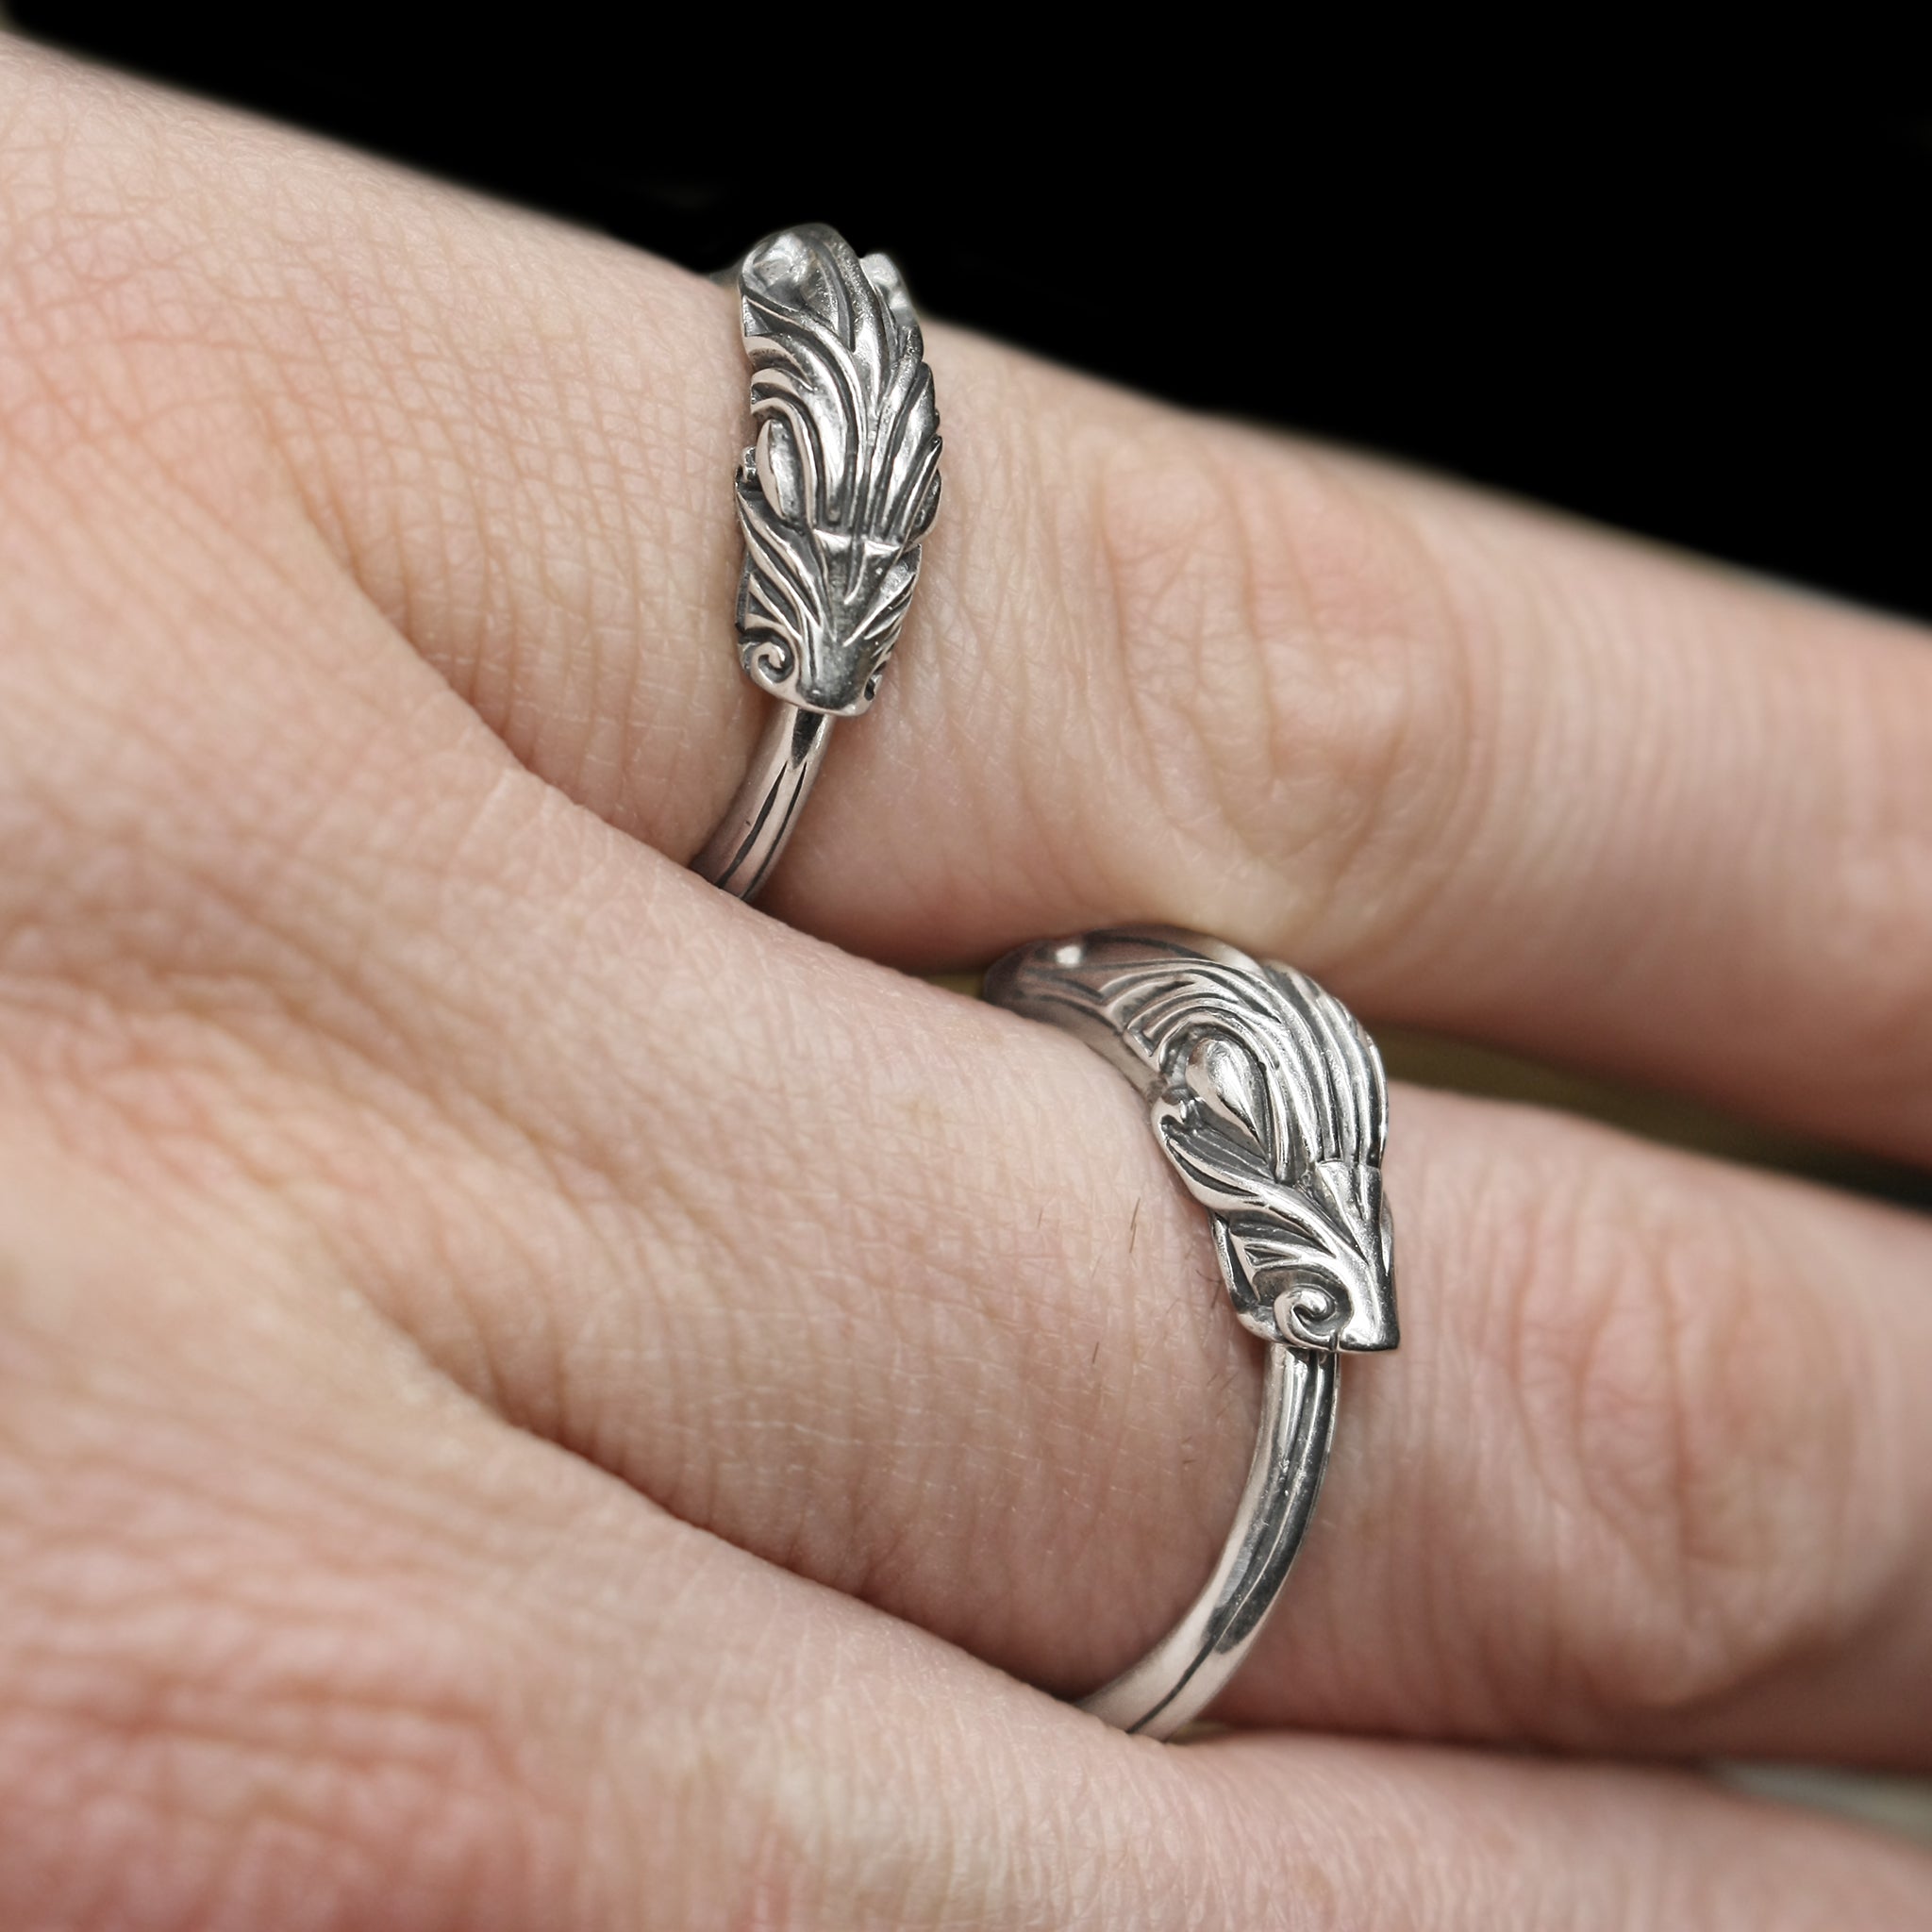 Silver Jormungandr Serpent Rings on Fingers